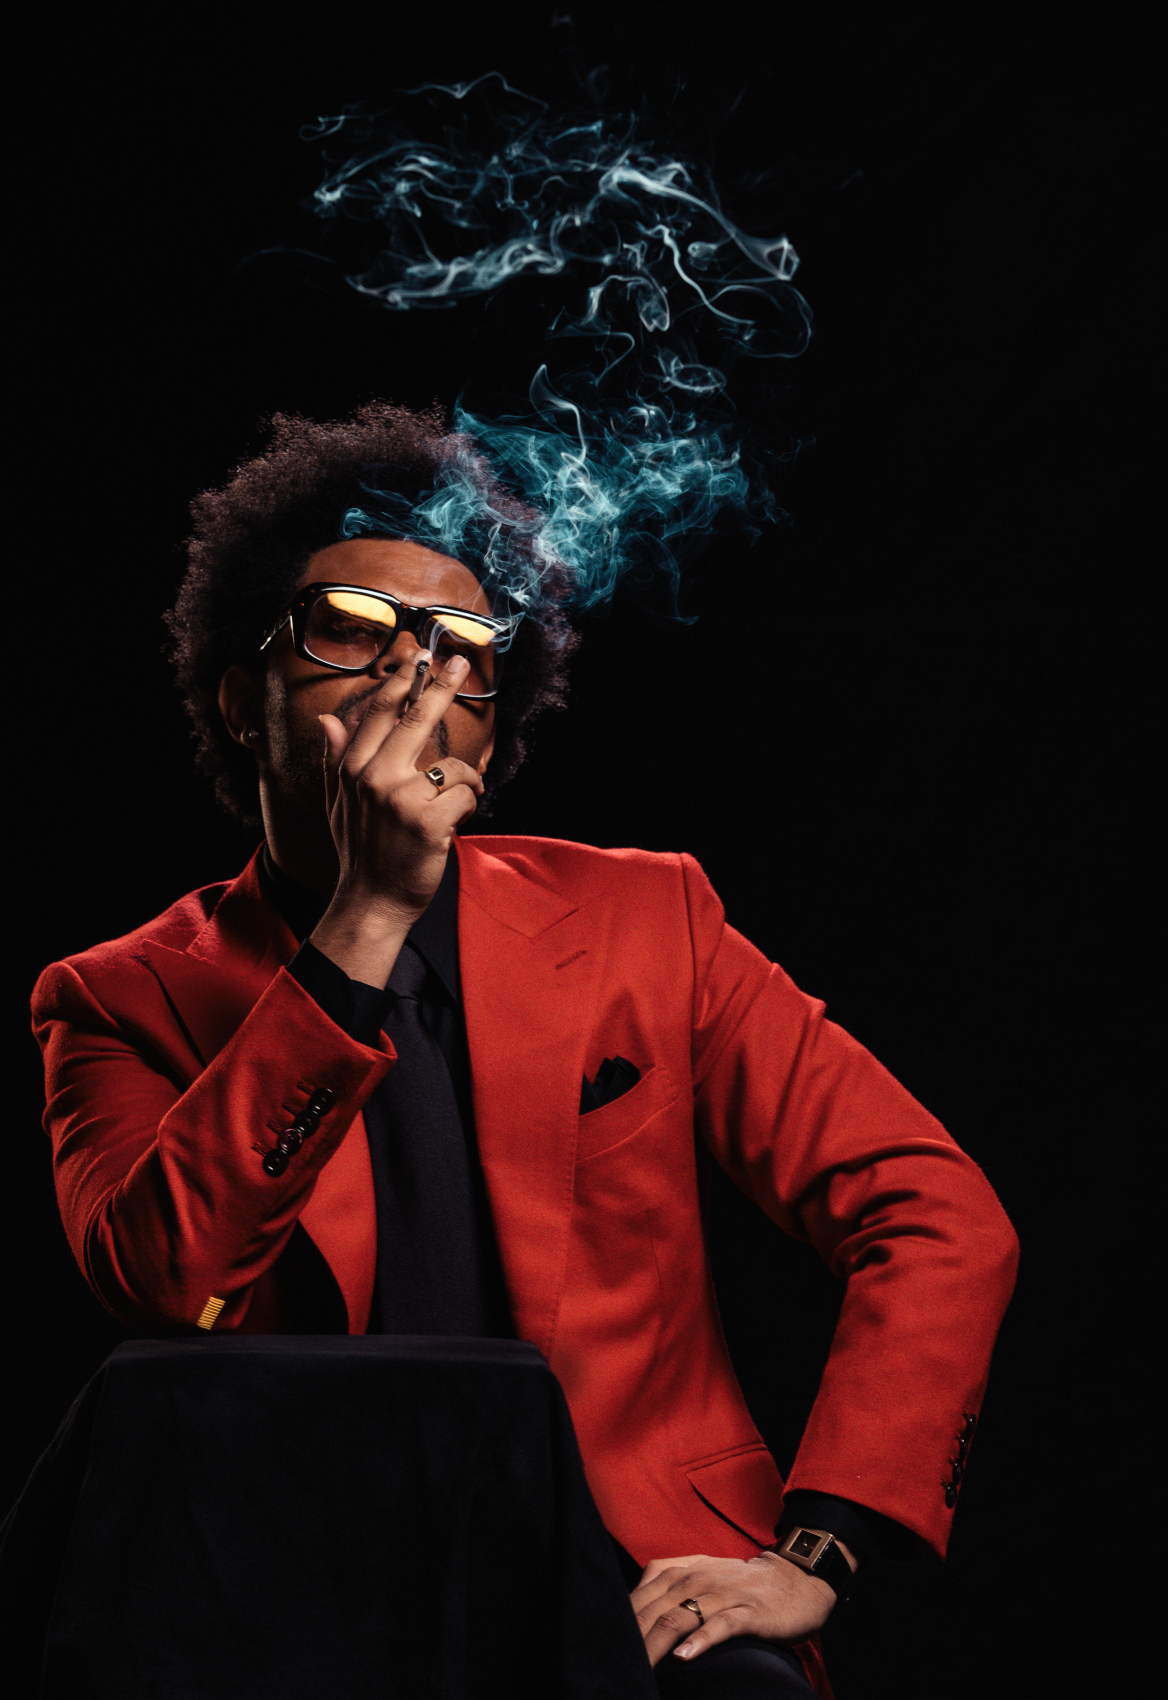 After Hours The Weeknd: wersja deluxe, świetne recenzje i rekordy w cyfrze